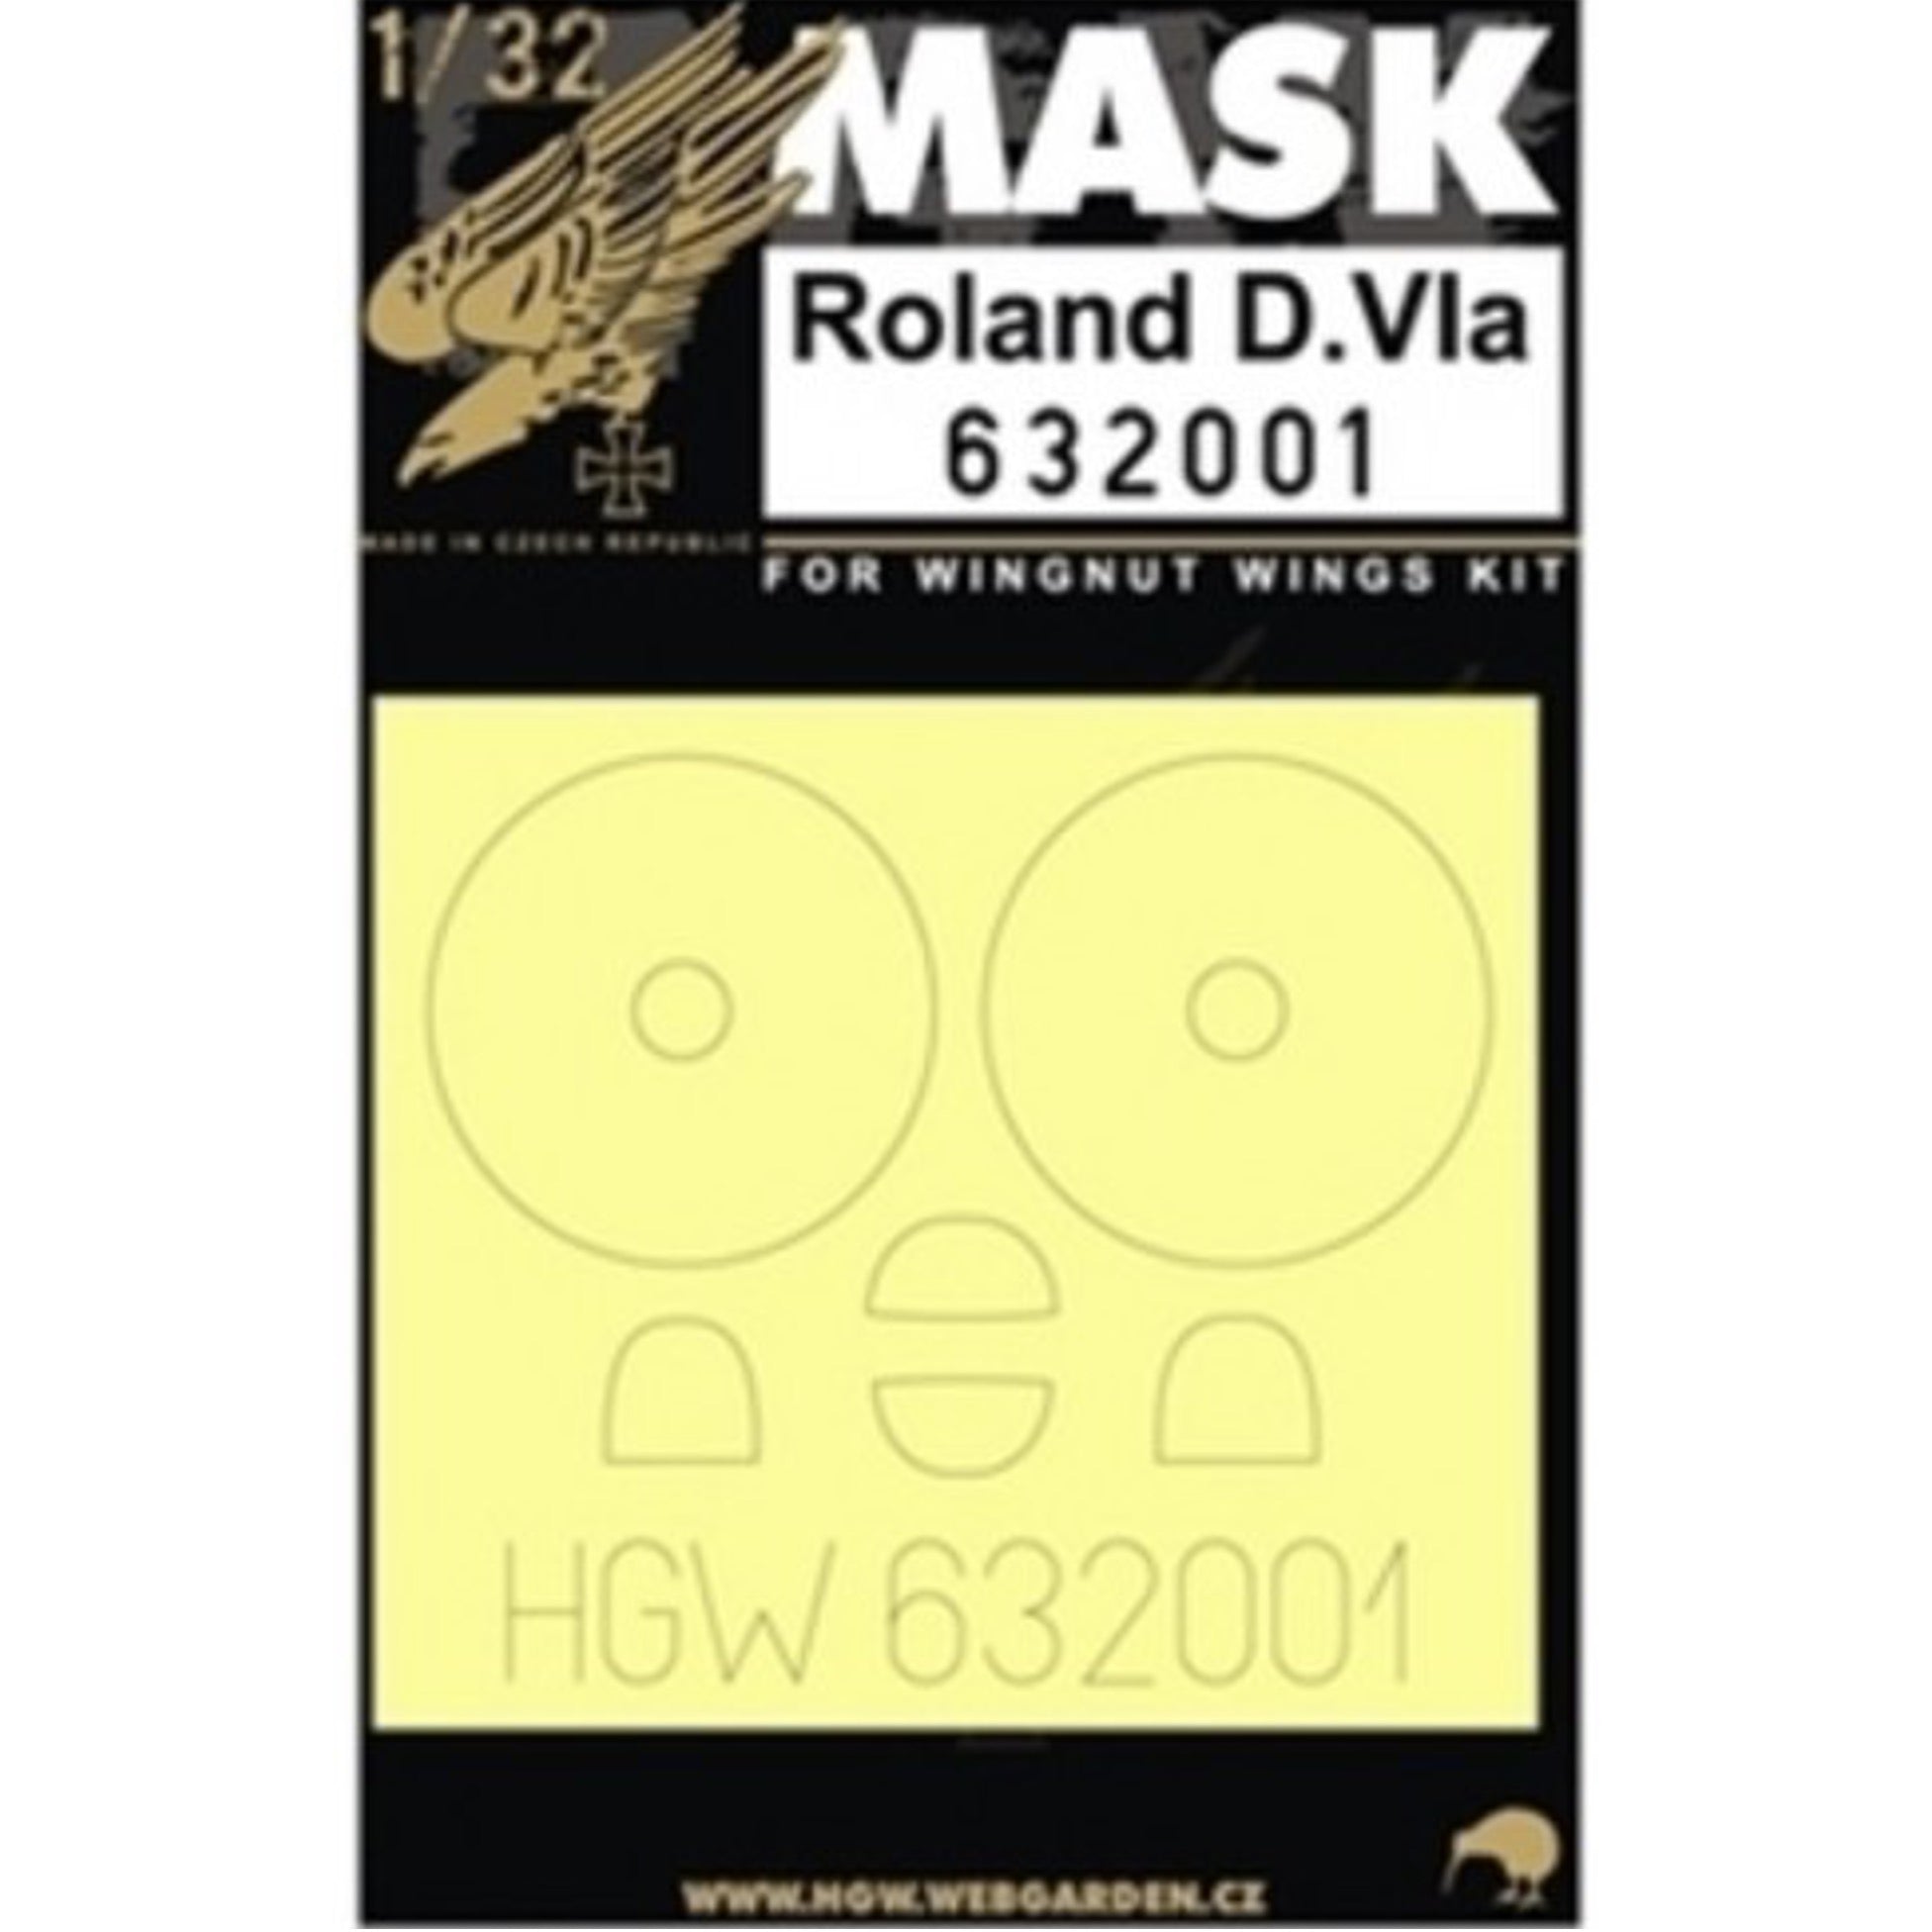 1/32 - Masks - Roland D.VIa